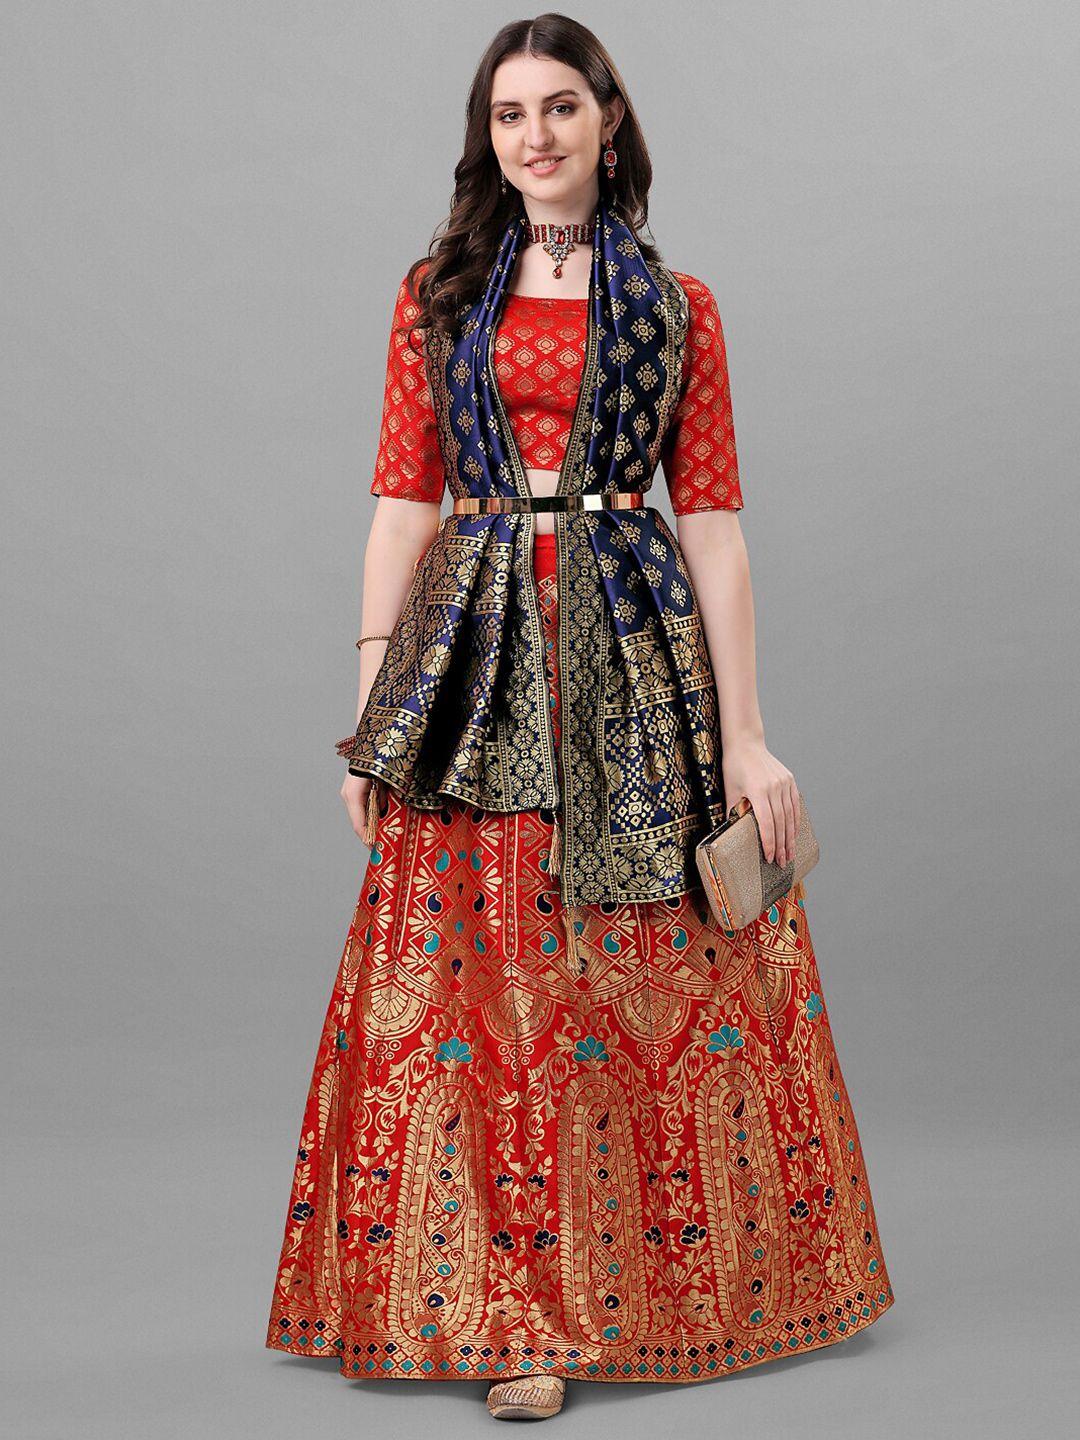 fashionuma red & navy blue semi-stitched lehenga & unstitched blouse with dupatta